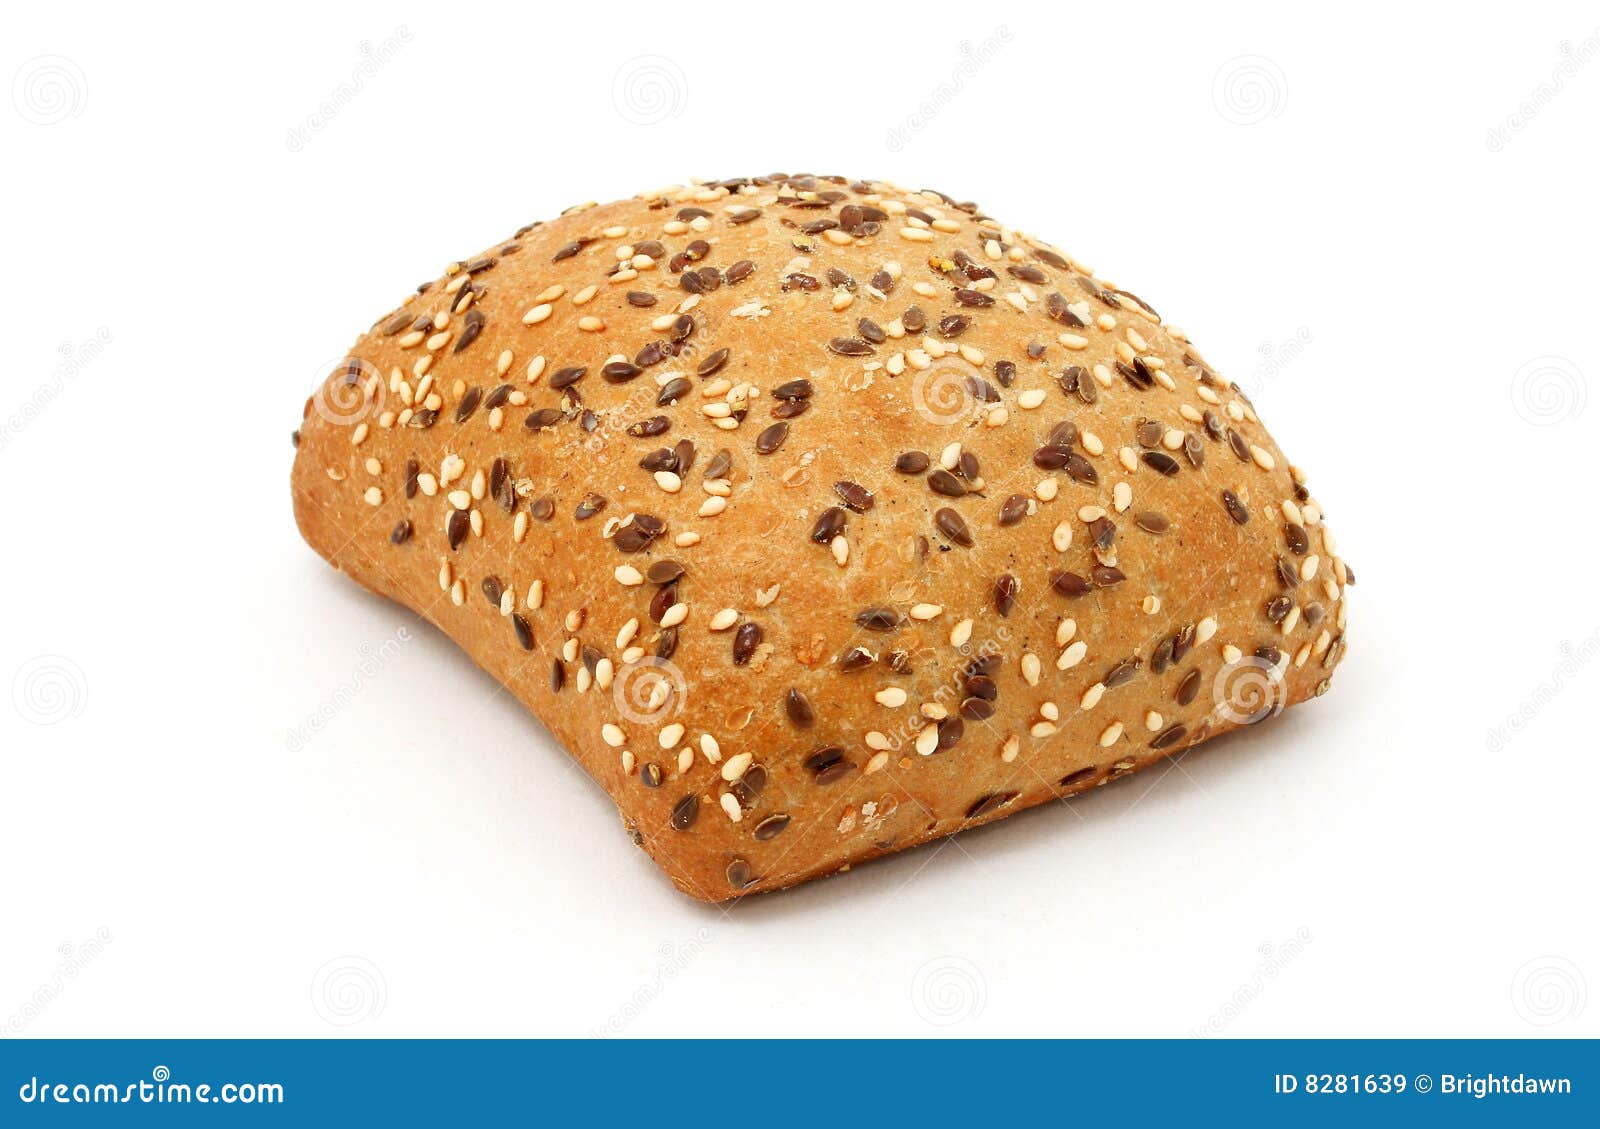 Multigrain bread roll stock image. Image of bread, food - 8281639